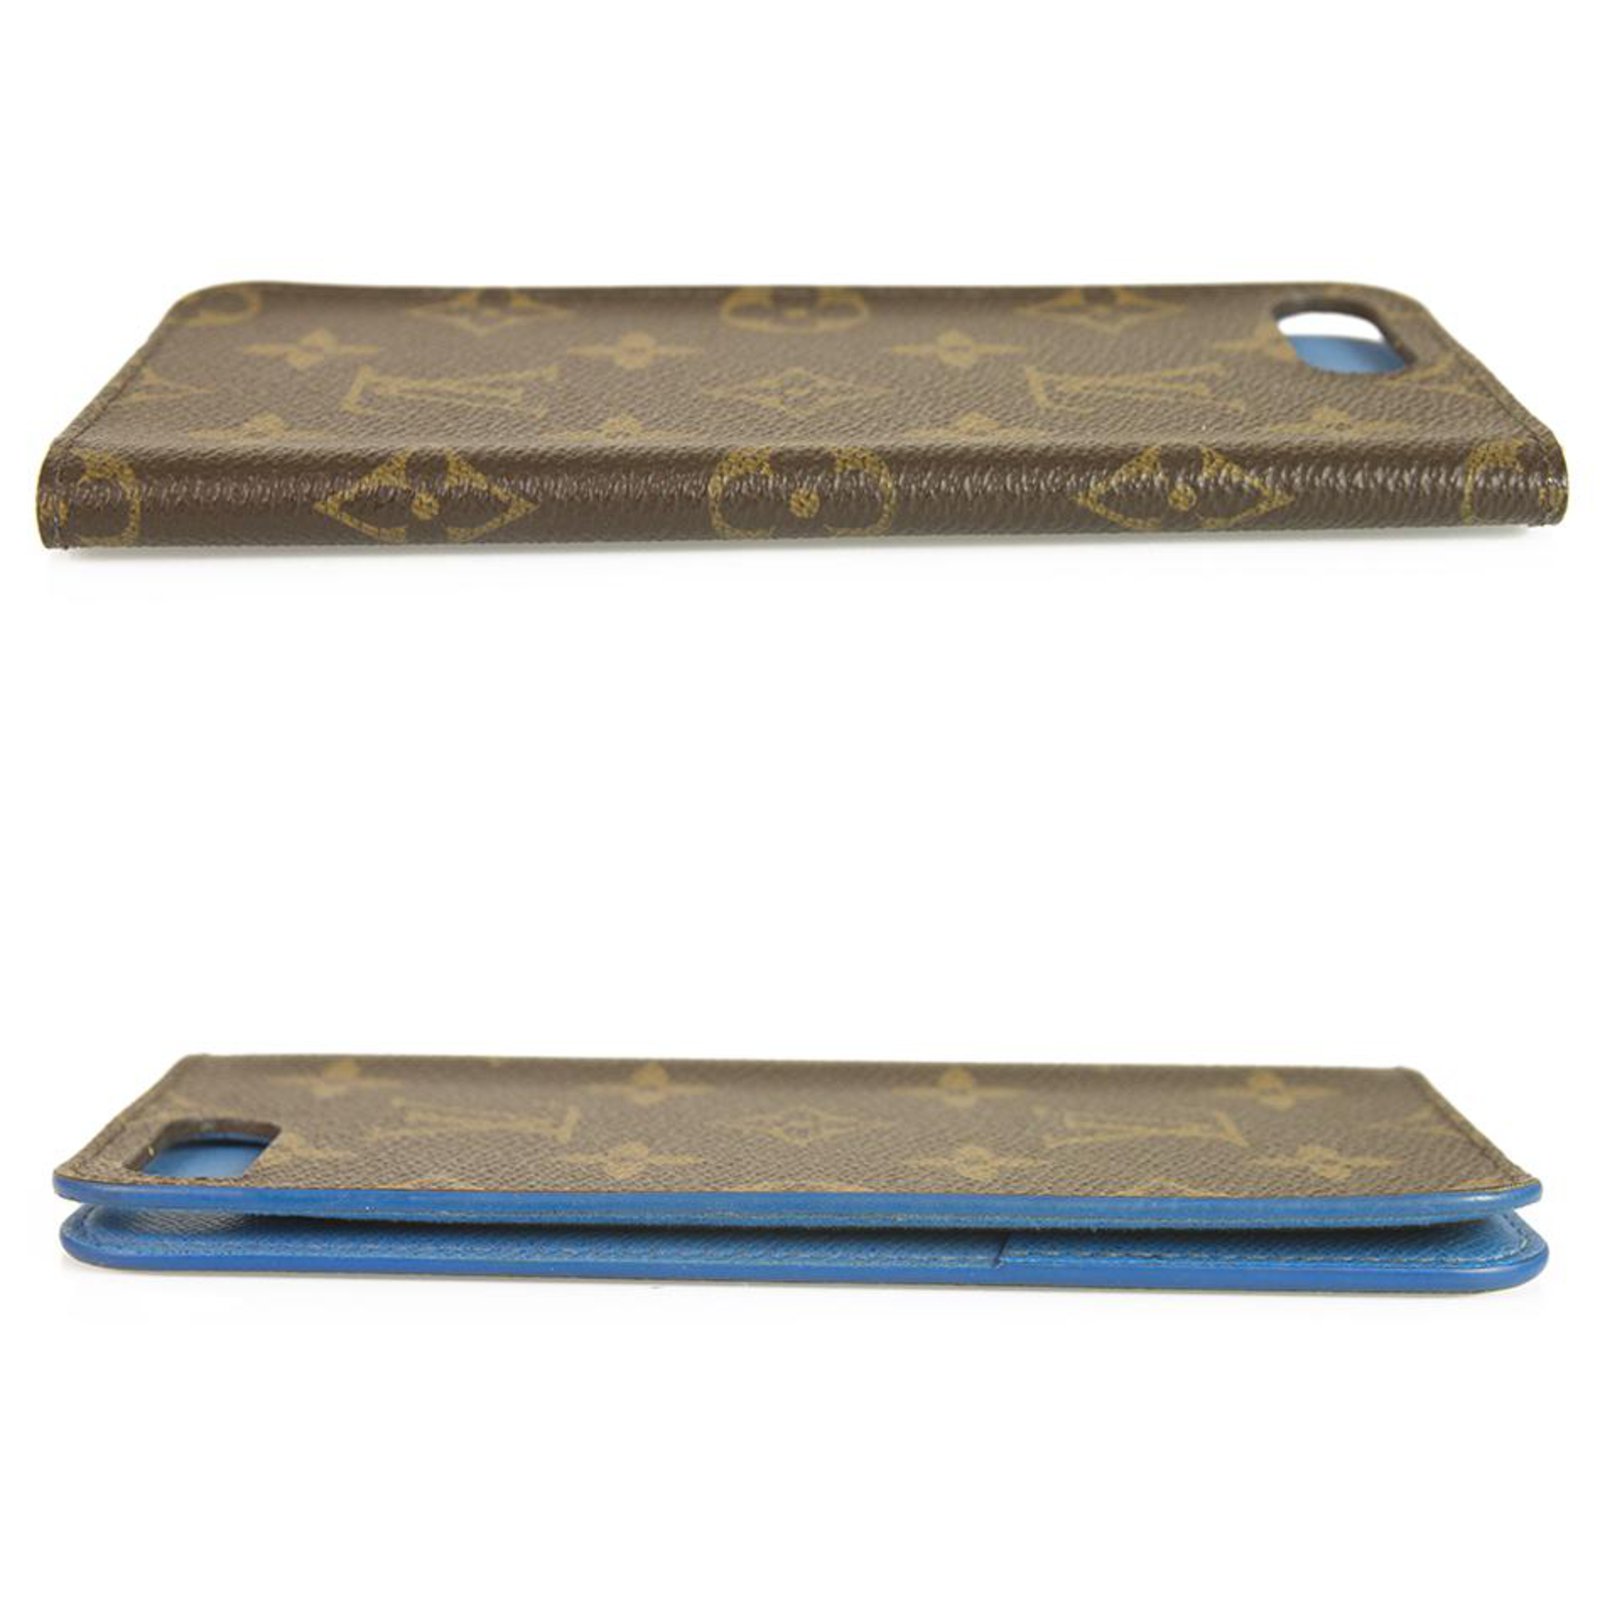 Louis Vuitton Louis Vuitton Monogram with Blue leather interior Iphone 7 Plus Phone Folio Case ...